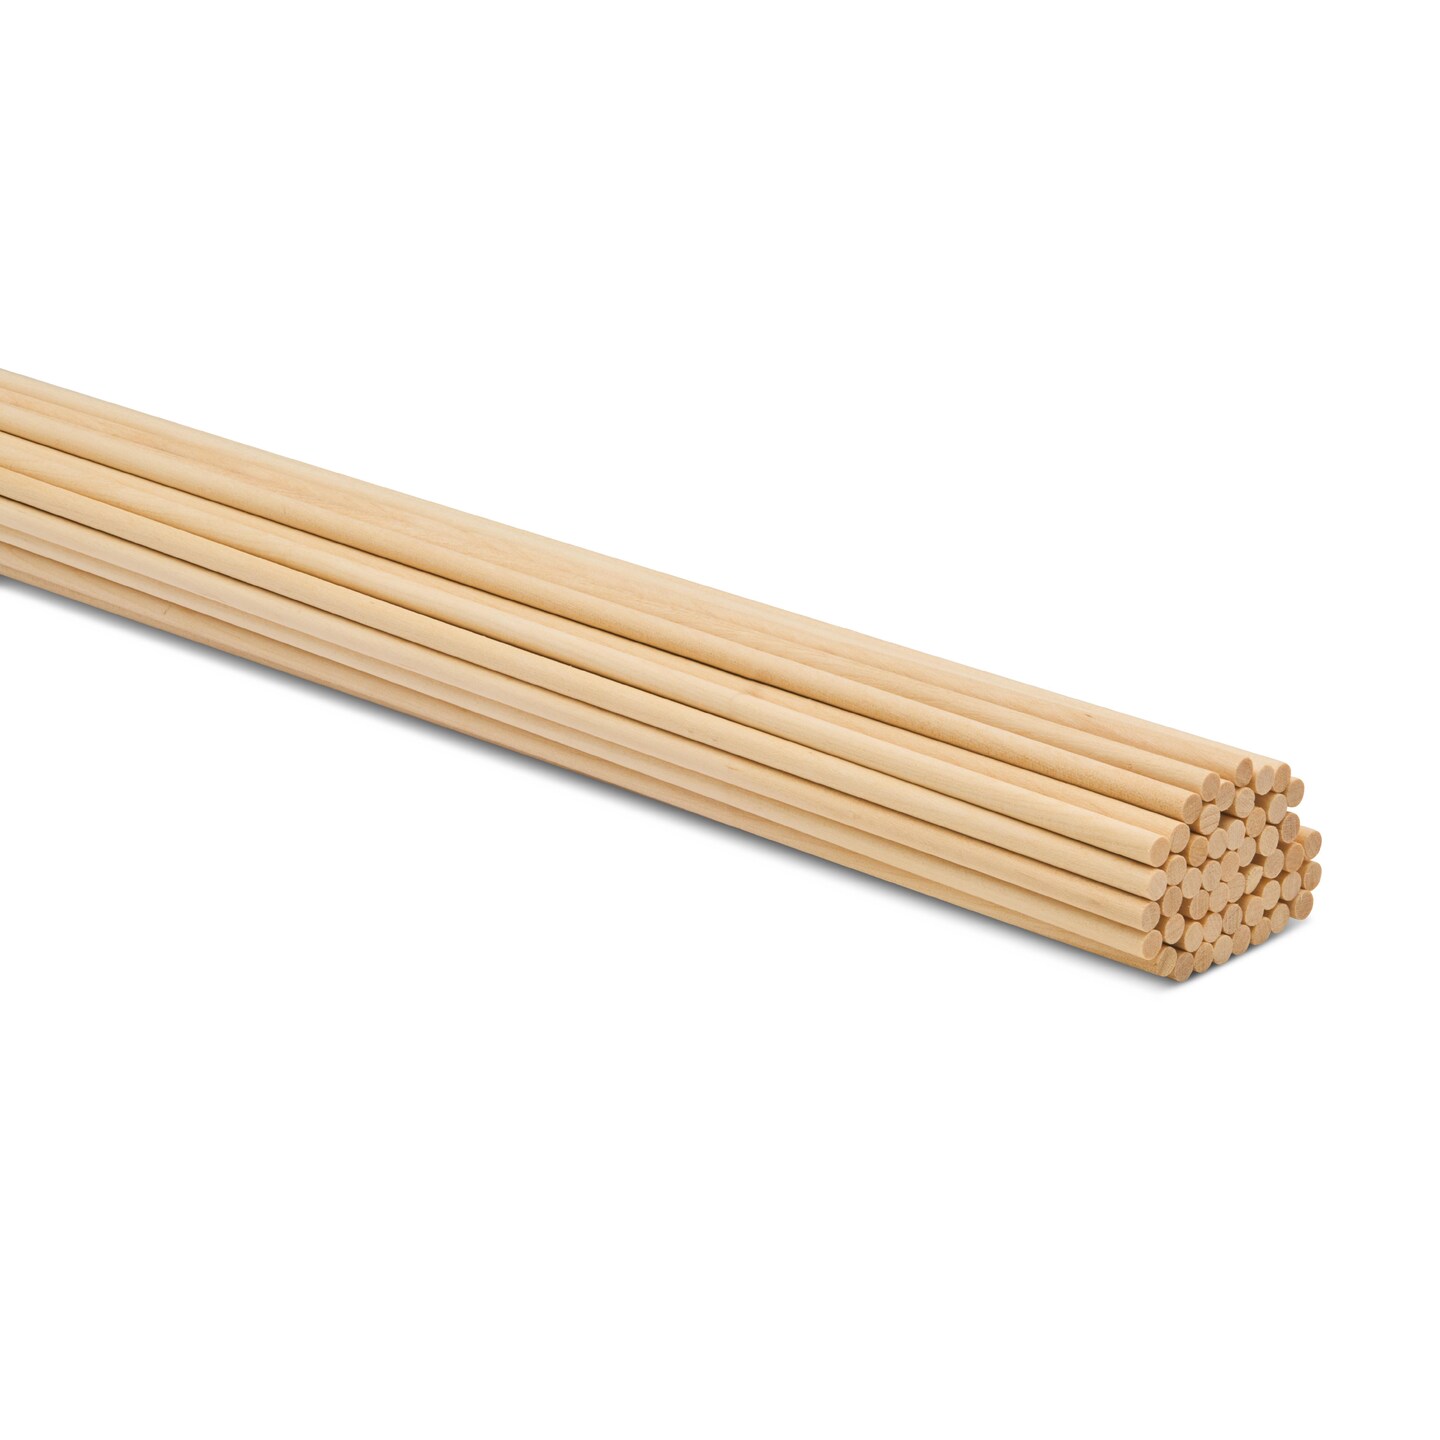 Wooden Dowel Rods 6 inch - 3/16 Hardwood Dowels Wood - Craft Dowels for  Woodwork